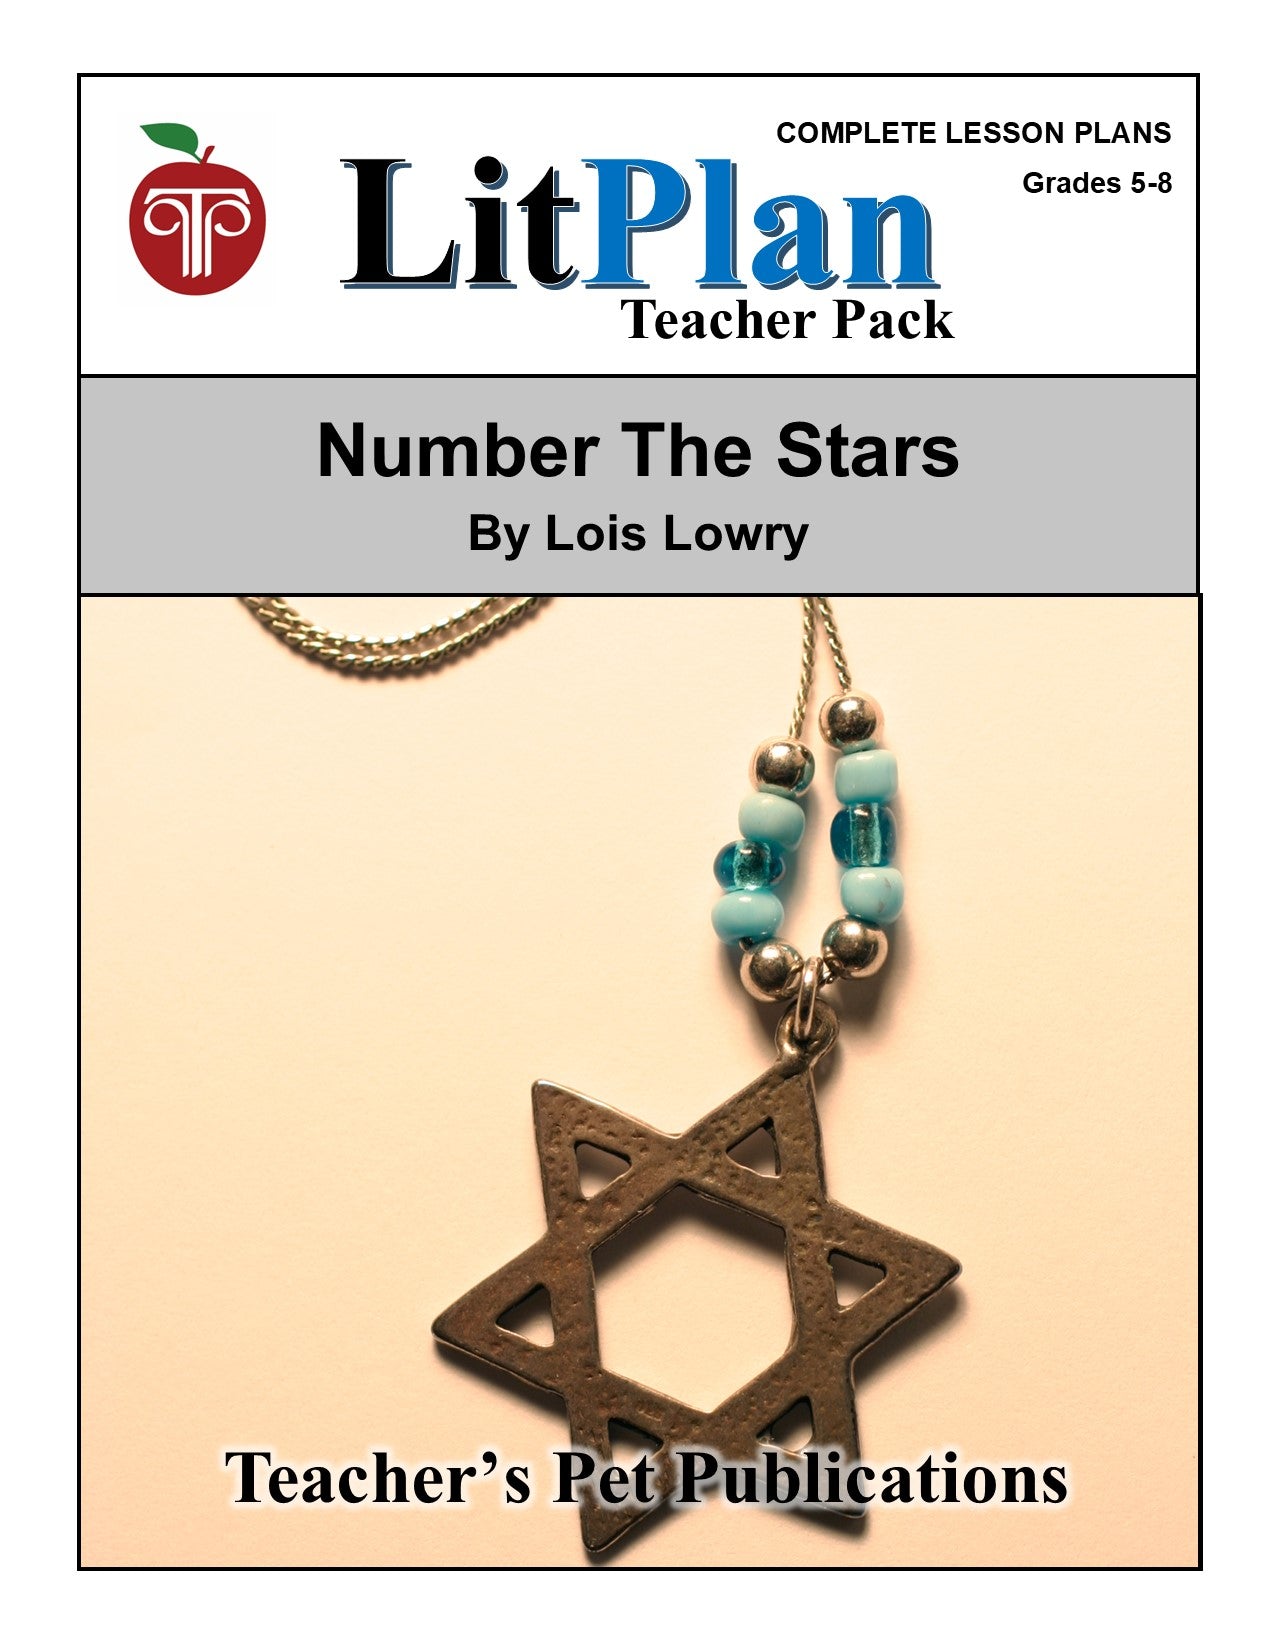 Number the Stars: LitPlan Teacher Pack Grades 5-8